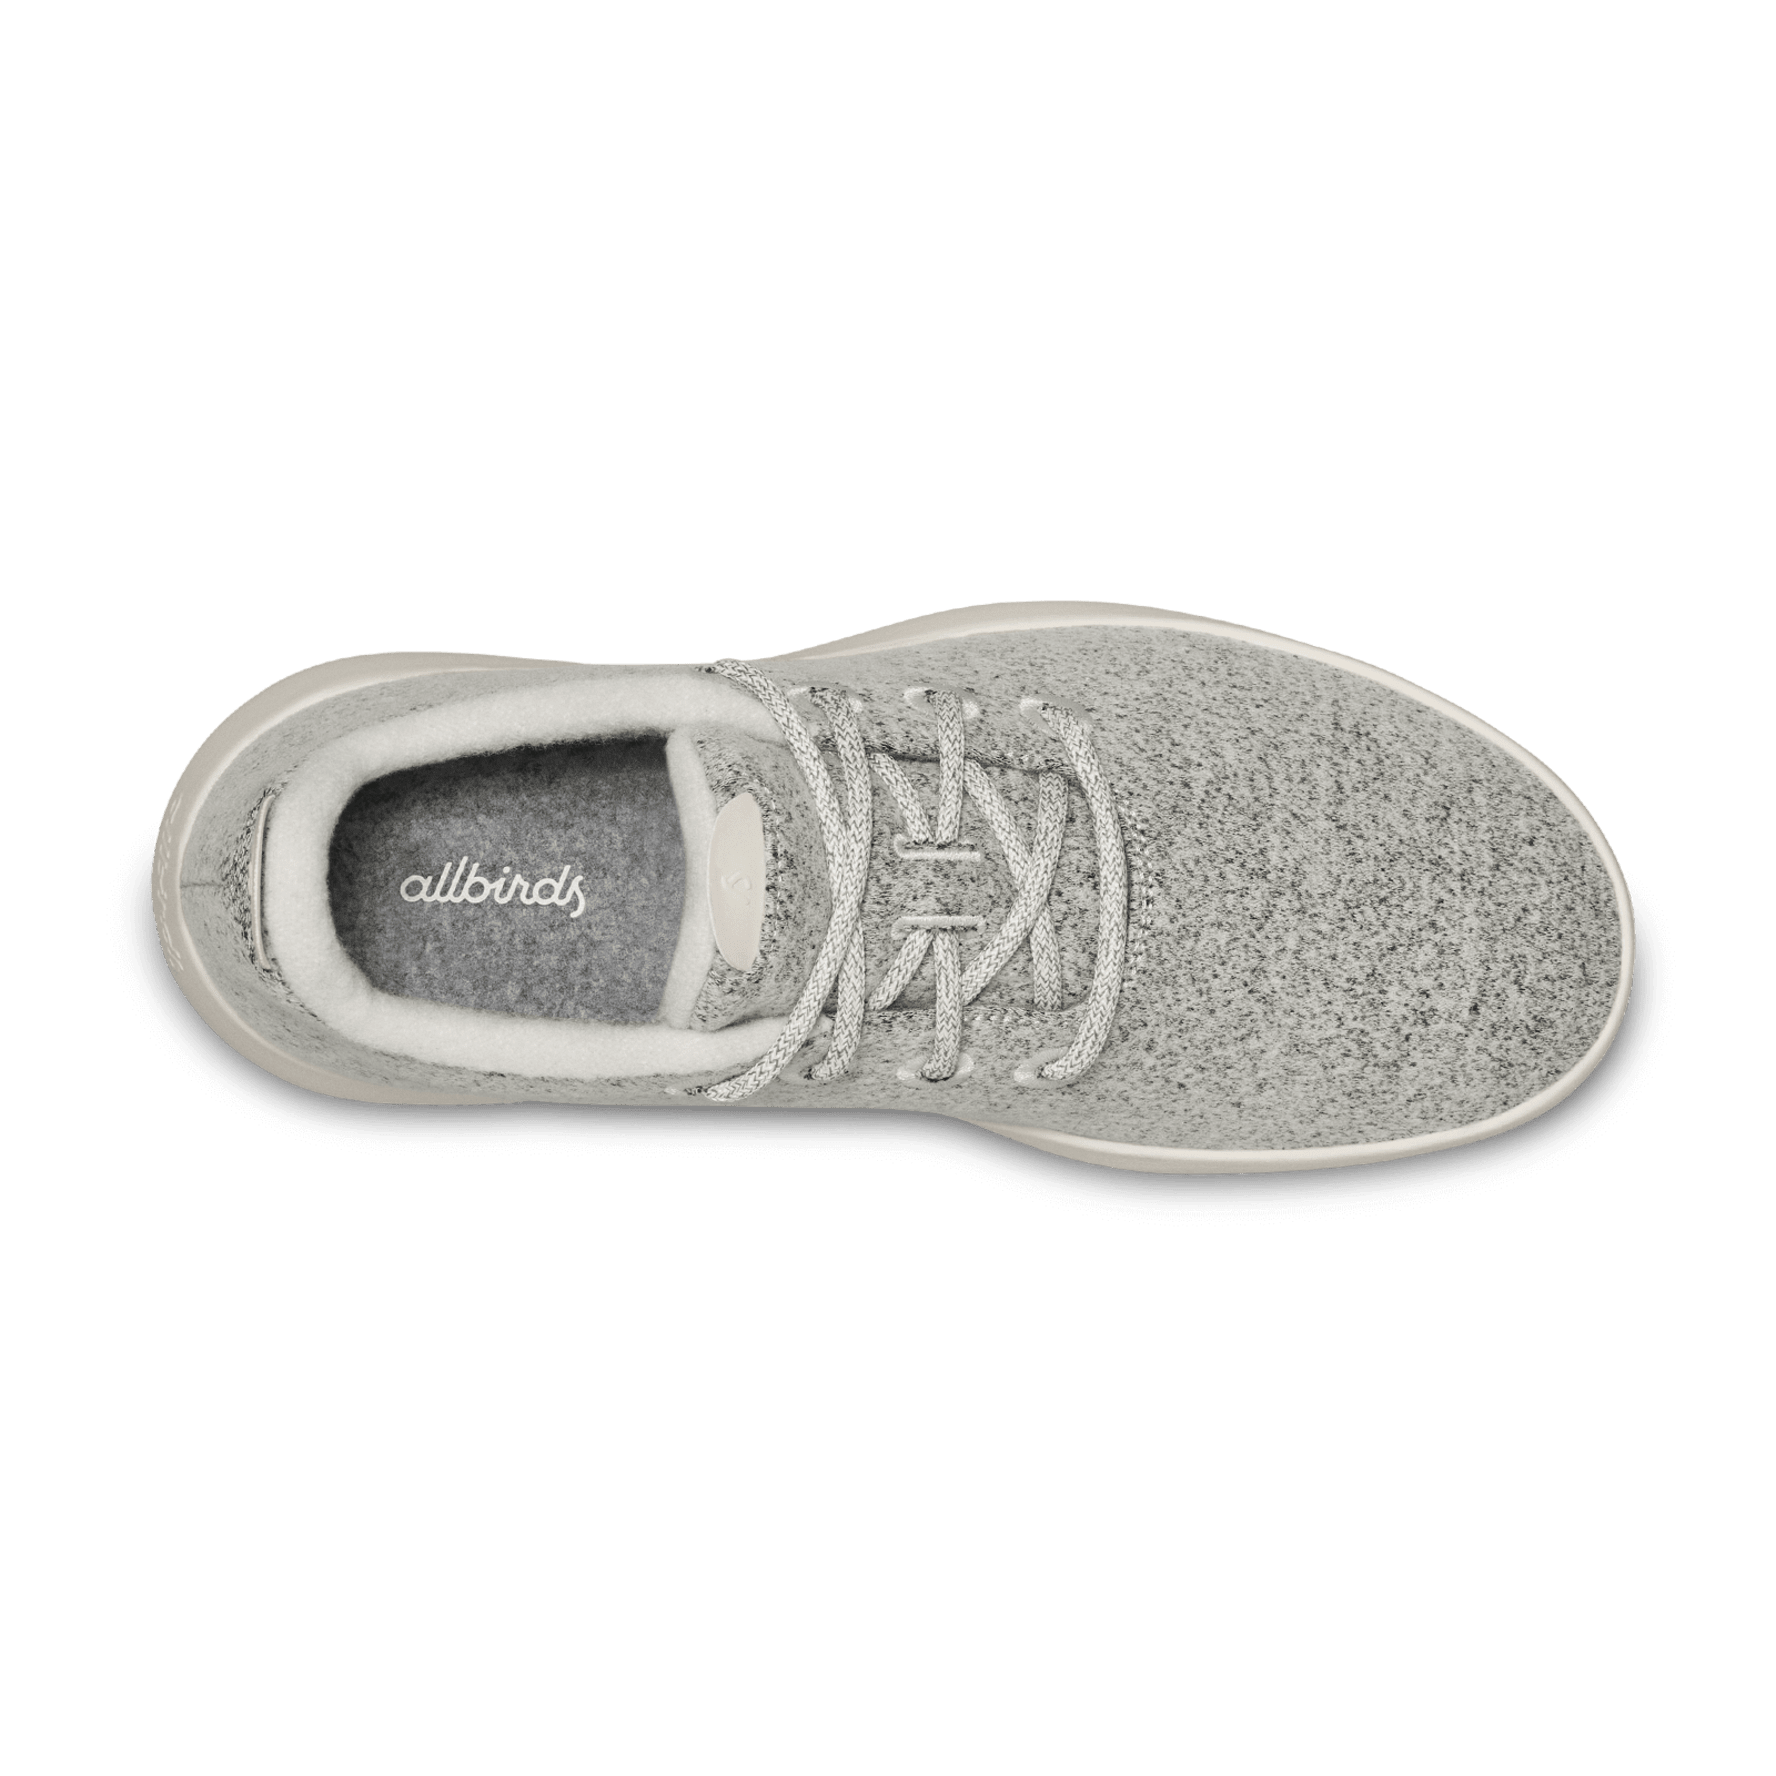 Allbirds Wool Runner Mizzles WRM Grey Shoes Women's Size 8 